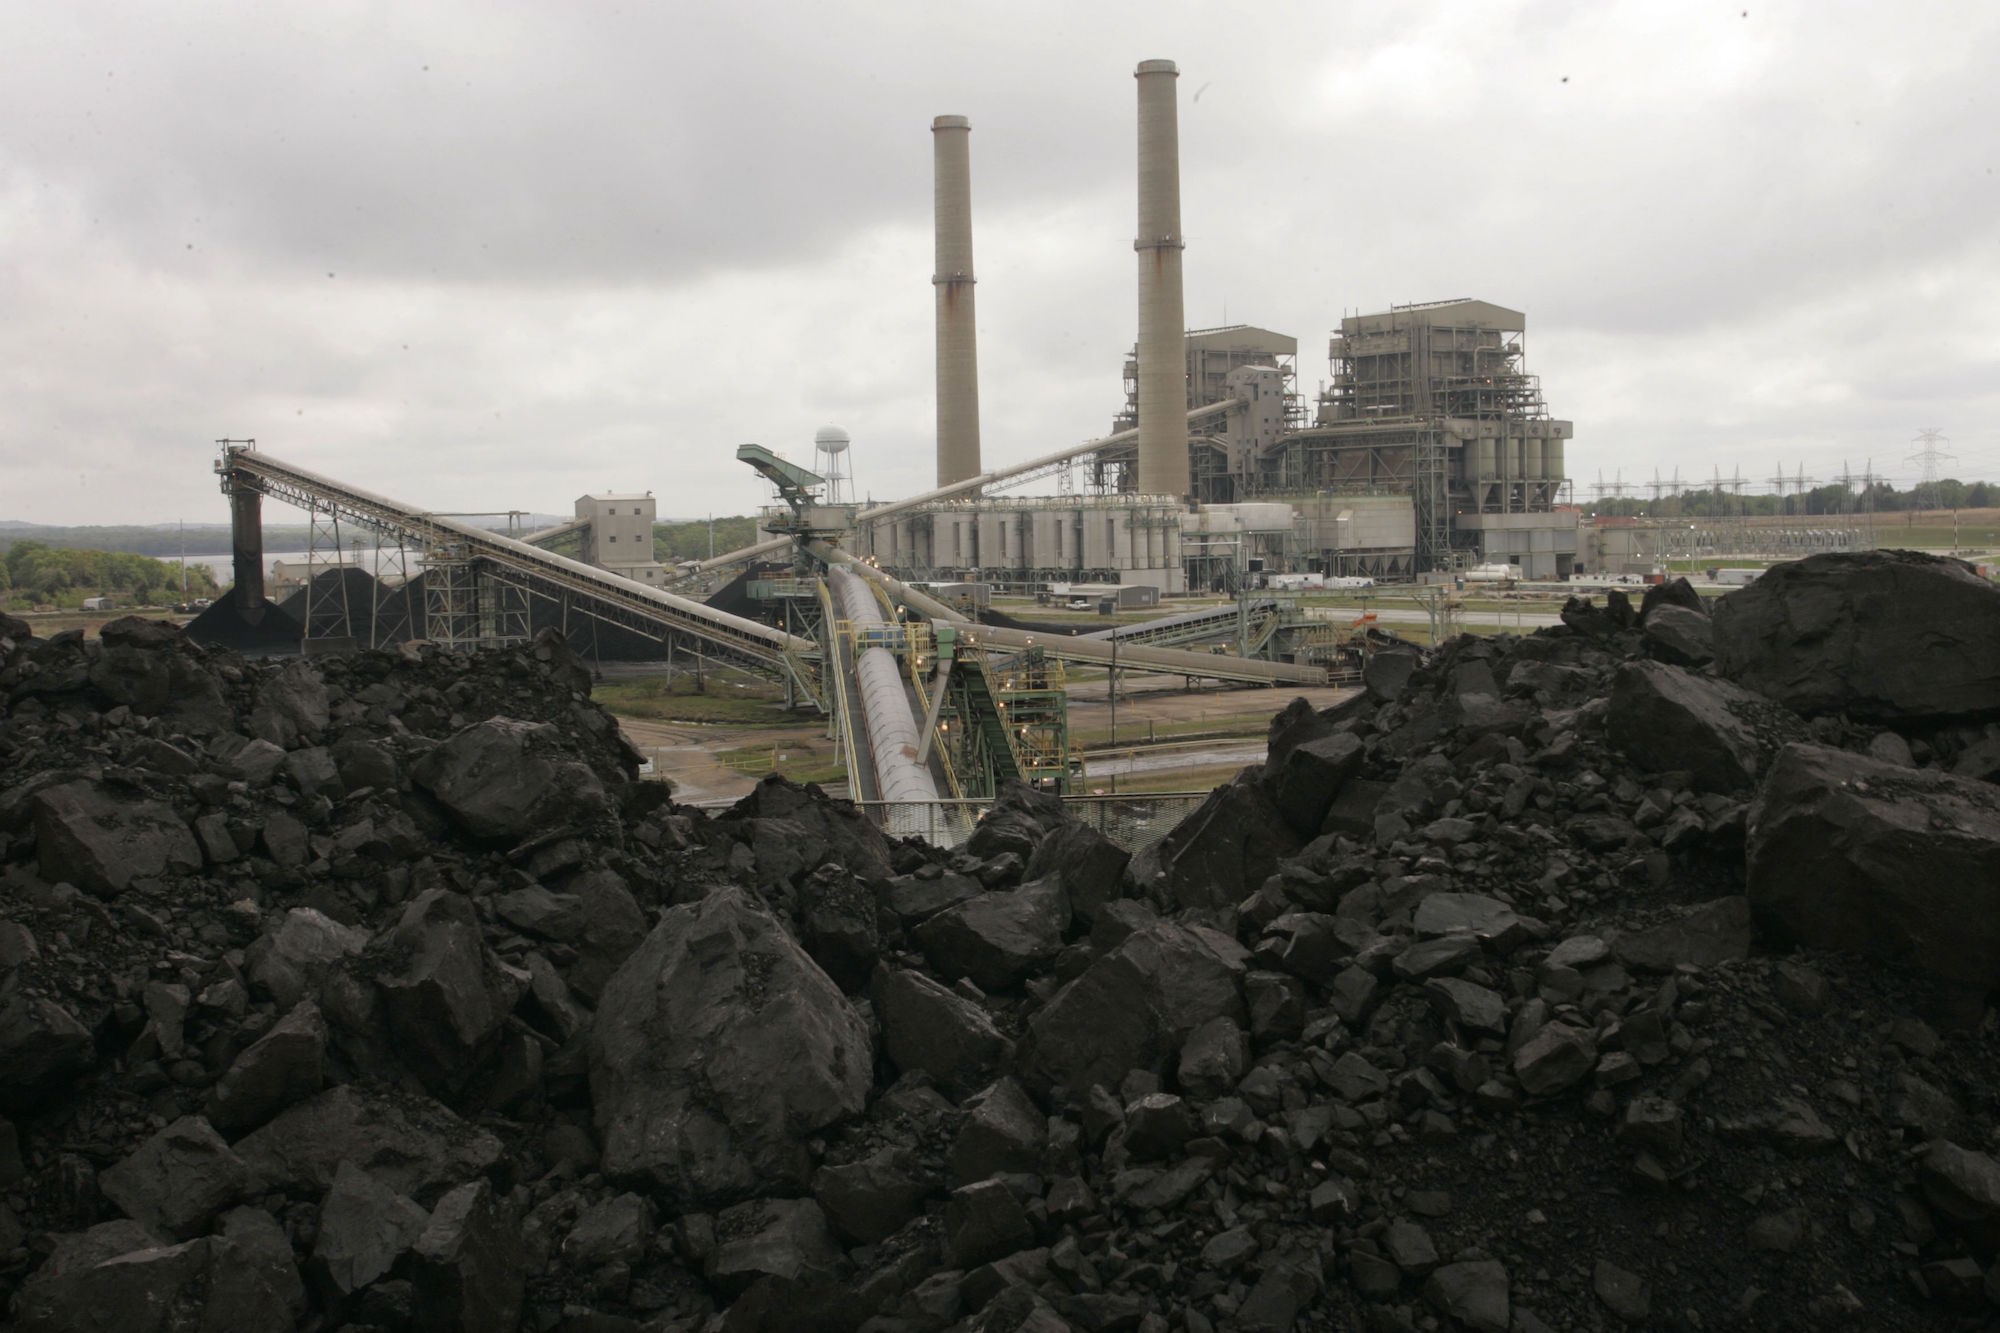 March 29, 2006 - U.S. - Dallas-based TXU, plans to build 11 new coal plants like the Big Brown coal mine and power plant in Freestone County northeast of Fairfield, Texas, March 29, 2006. (Tom Fox/Dallas Morning News/TNS) (Credit Image: � Tom Fox/TNS/ZUMAPRESS.com)